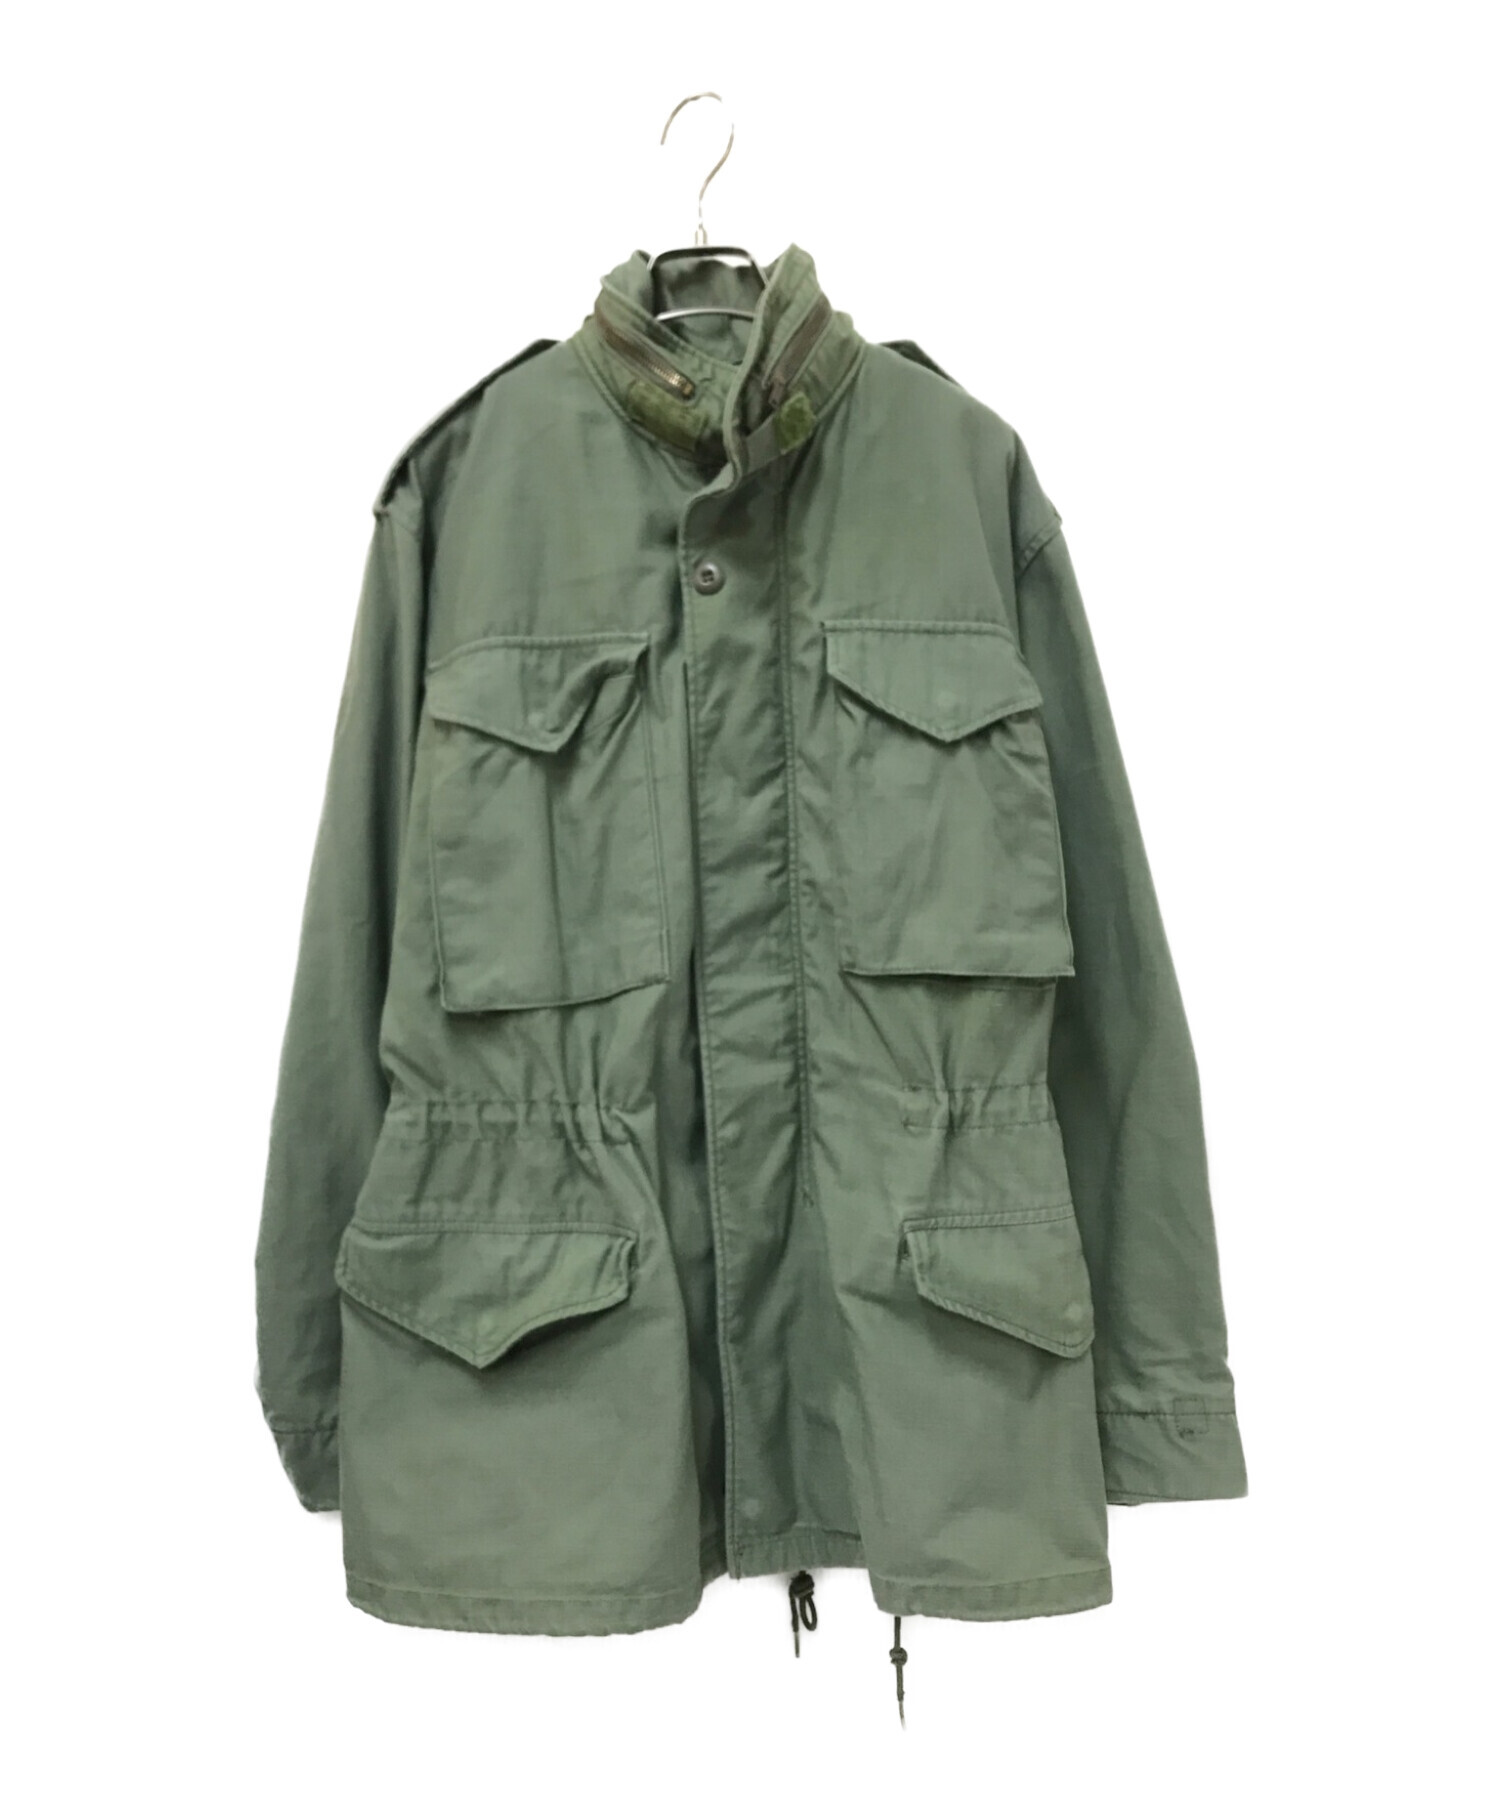 ALPHA (アルファ) M-65 フィールドジャケット オリーブ サイズ:SMALL REGULAR